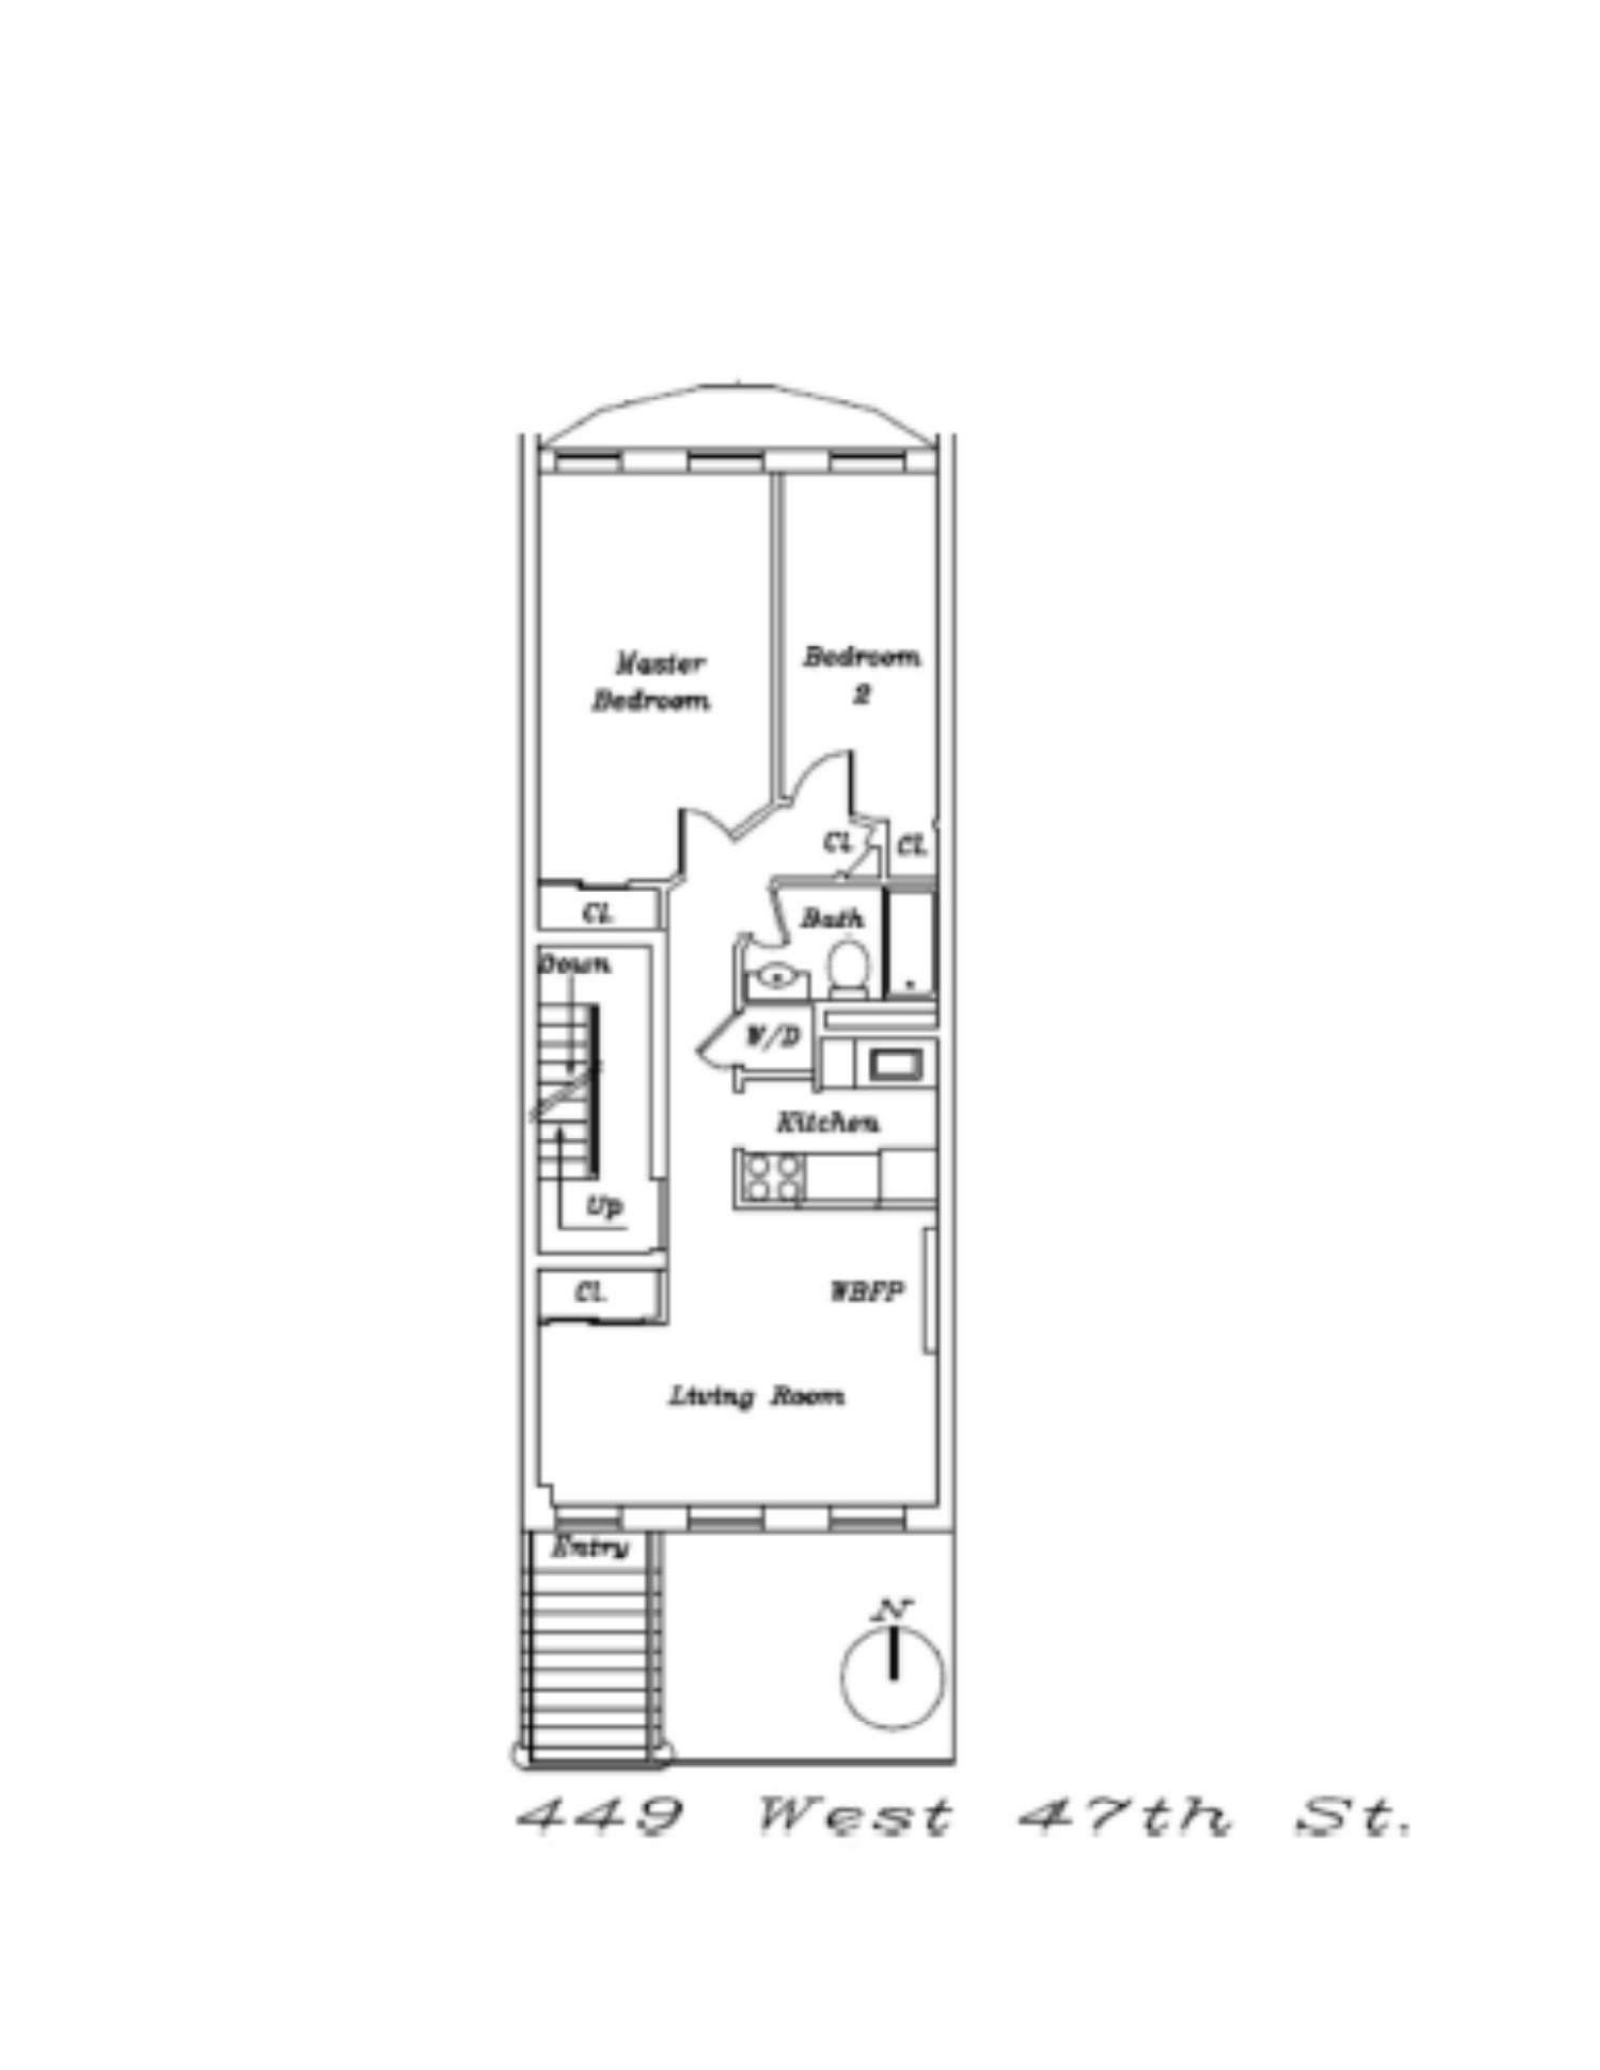 Floorplan for 449 West, 47th Street, 4